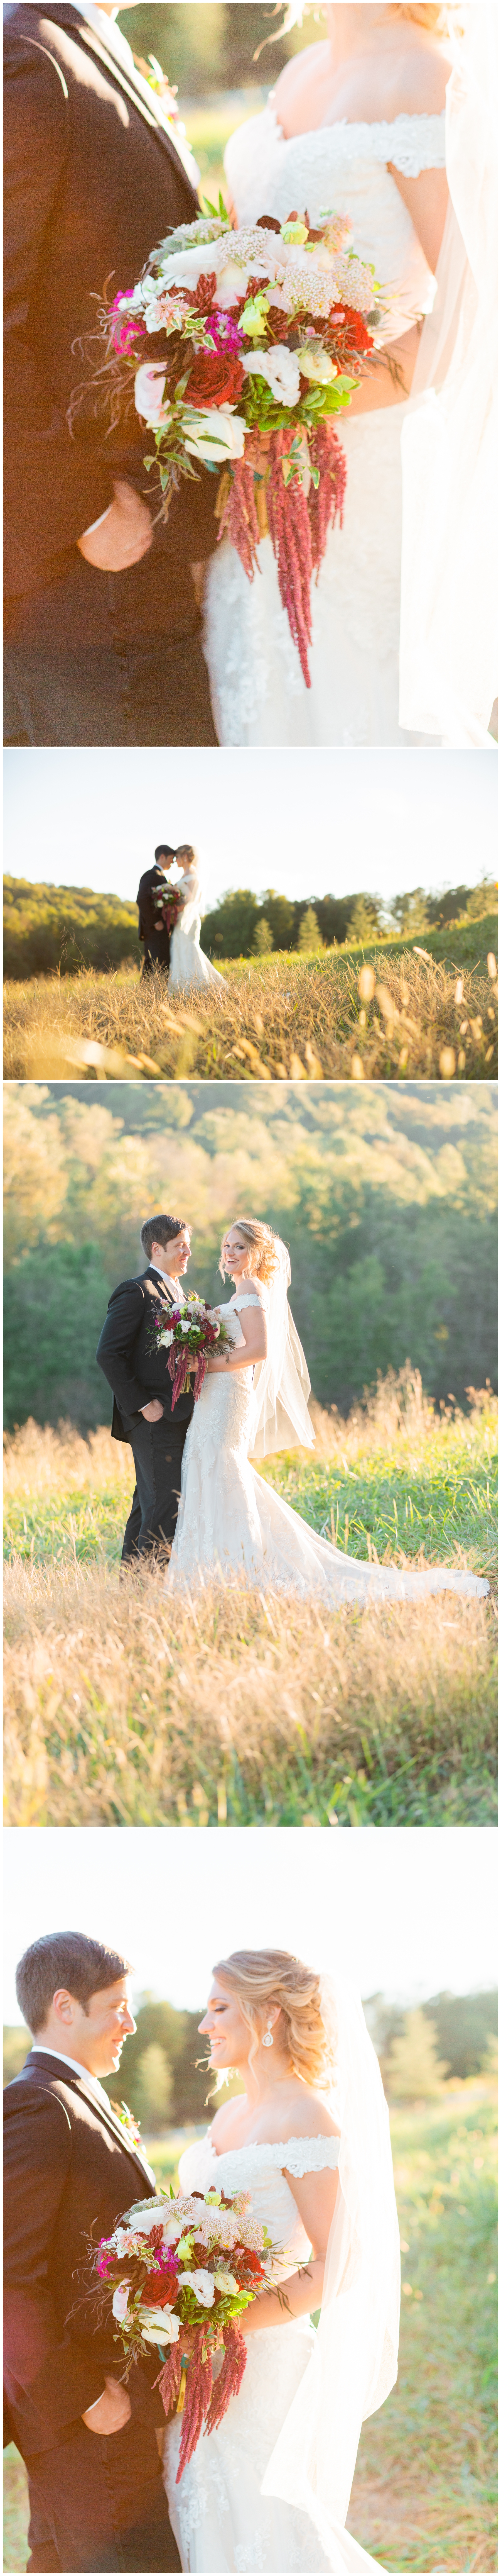 Atlanta_Georgia_Wedding_Photographer_Venue_Blog_Greystone Estate_Fall_Engaged_Bride and Groom_Sunset Portraits